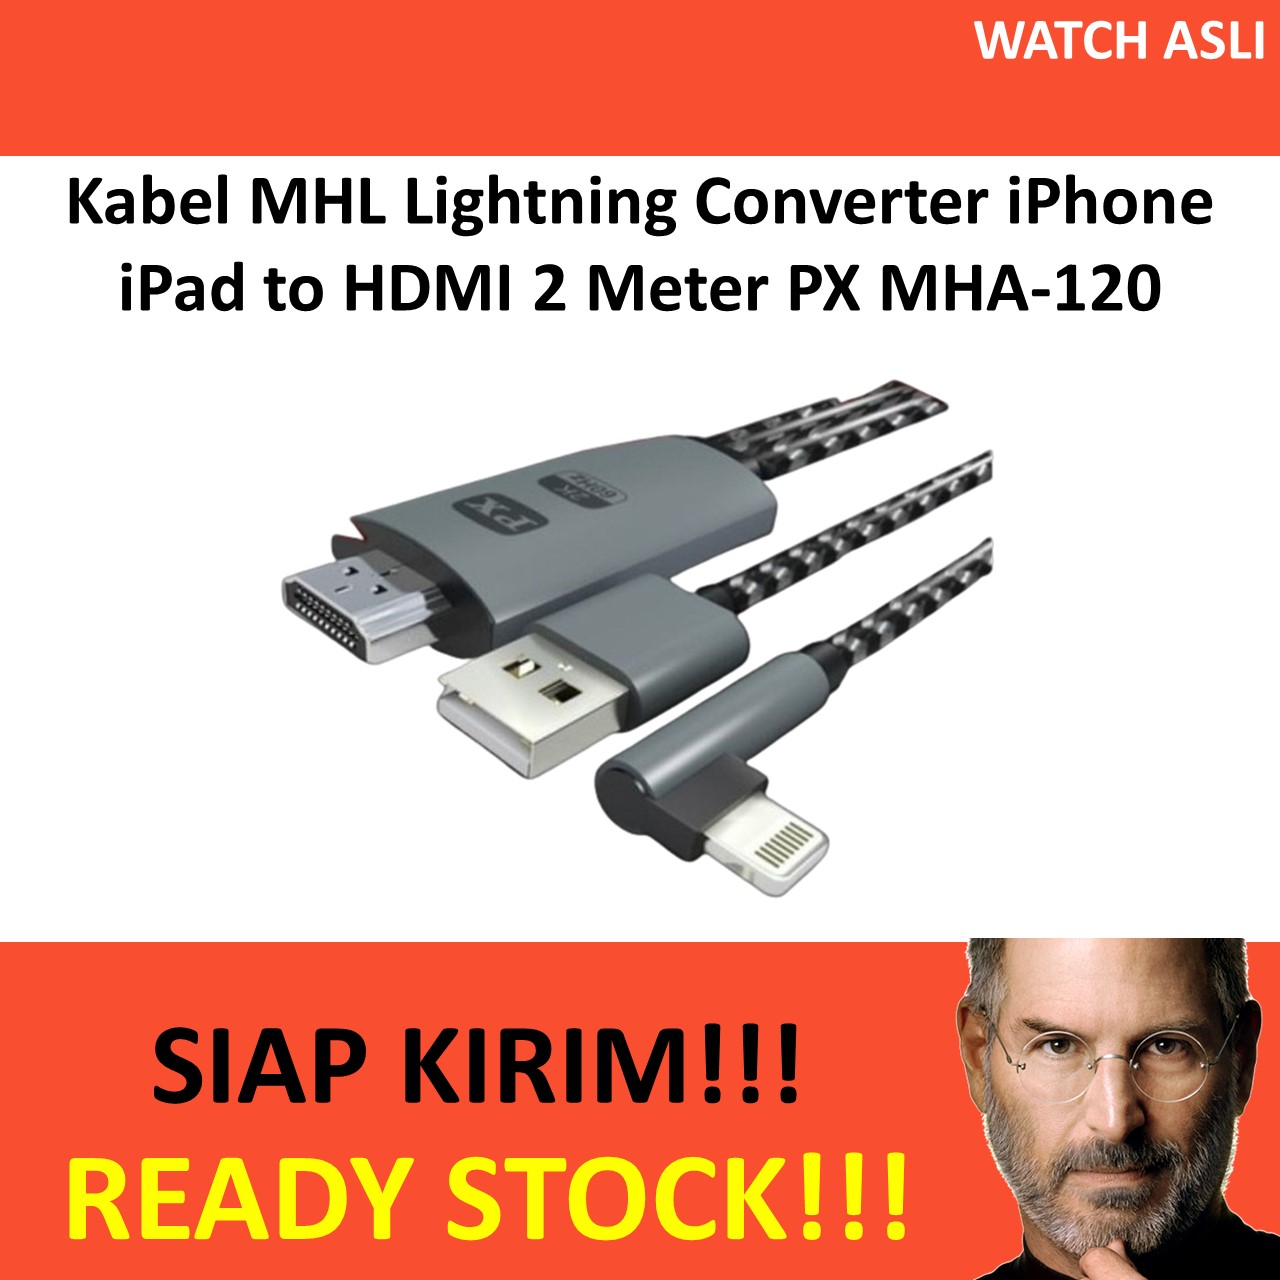 Kabel MHL Lightning Converter iPhone iPad to HDMI 2 Meter PX MHA-120